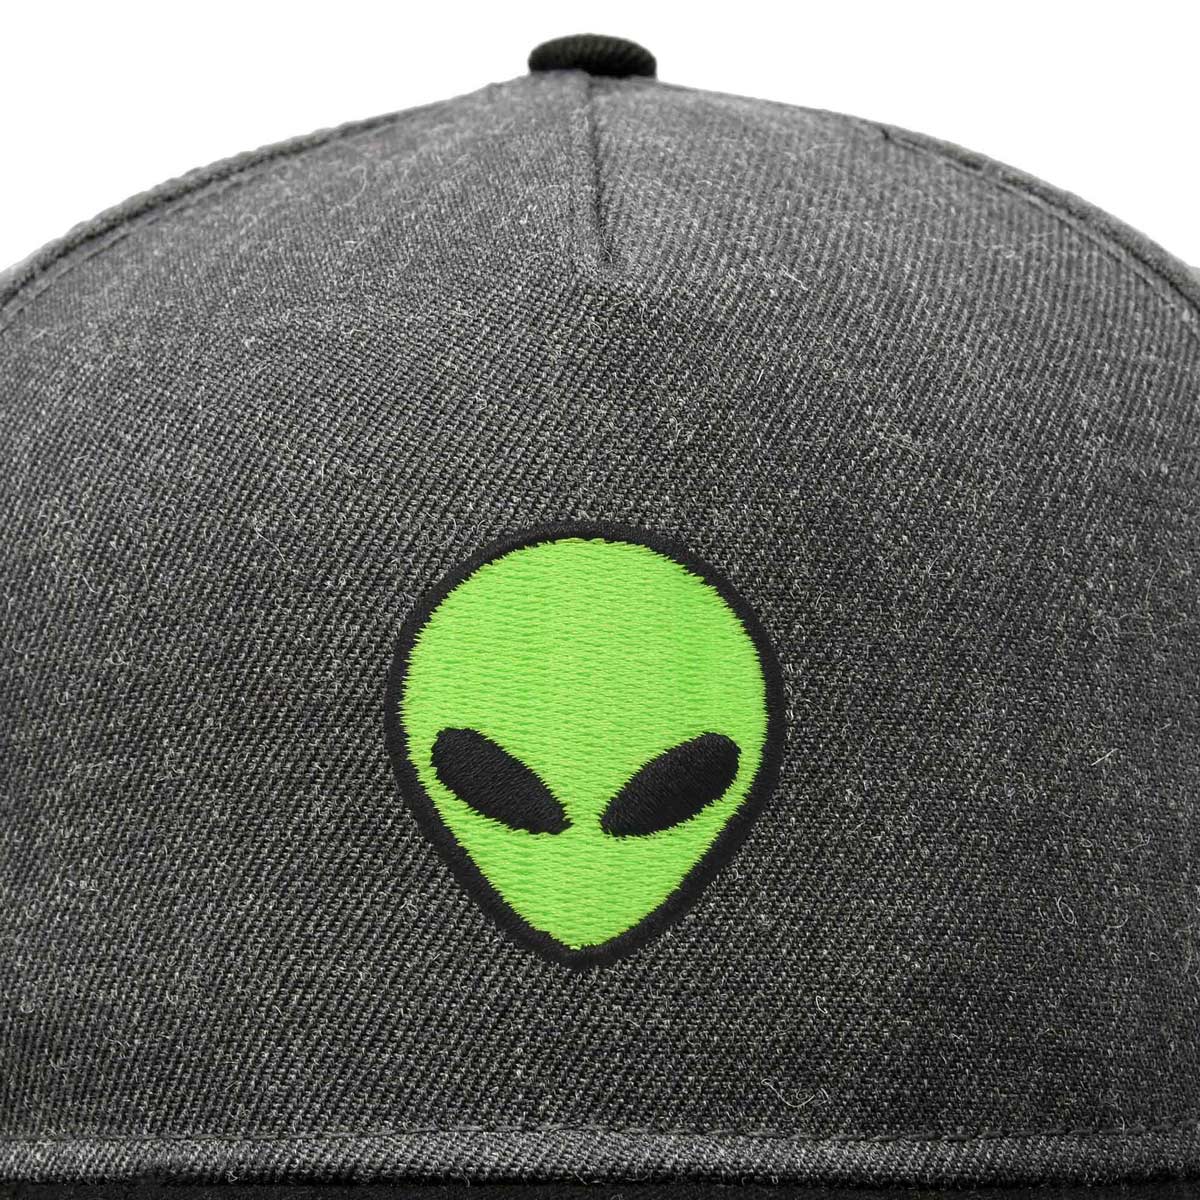 Dalix Alien Snapback Flat Bill Baseball Hat Embroidered Cap Mens in Black Dark Gray